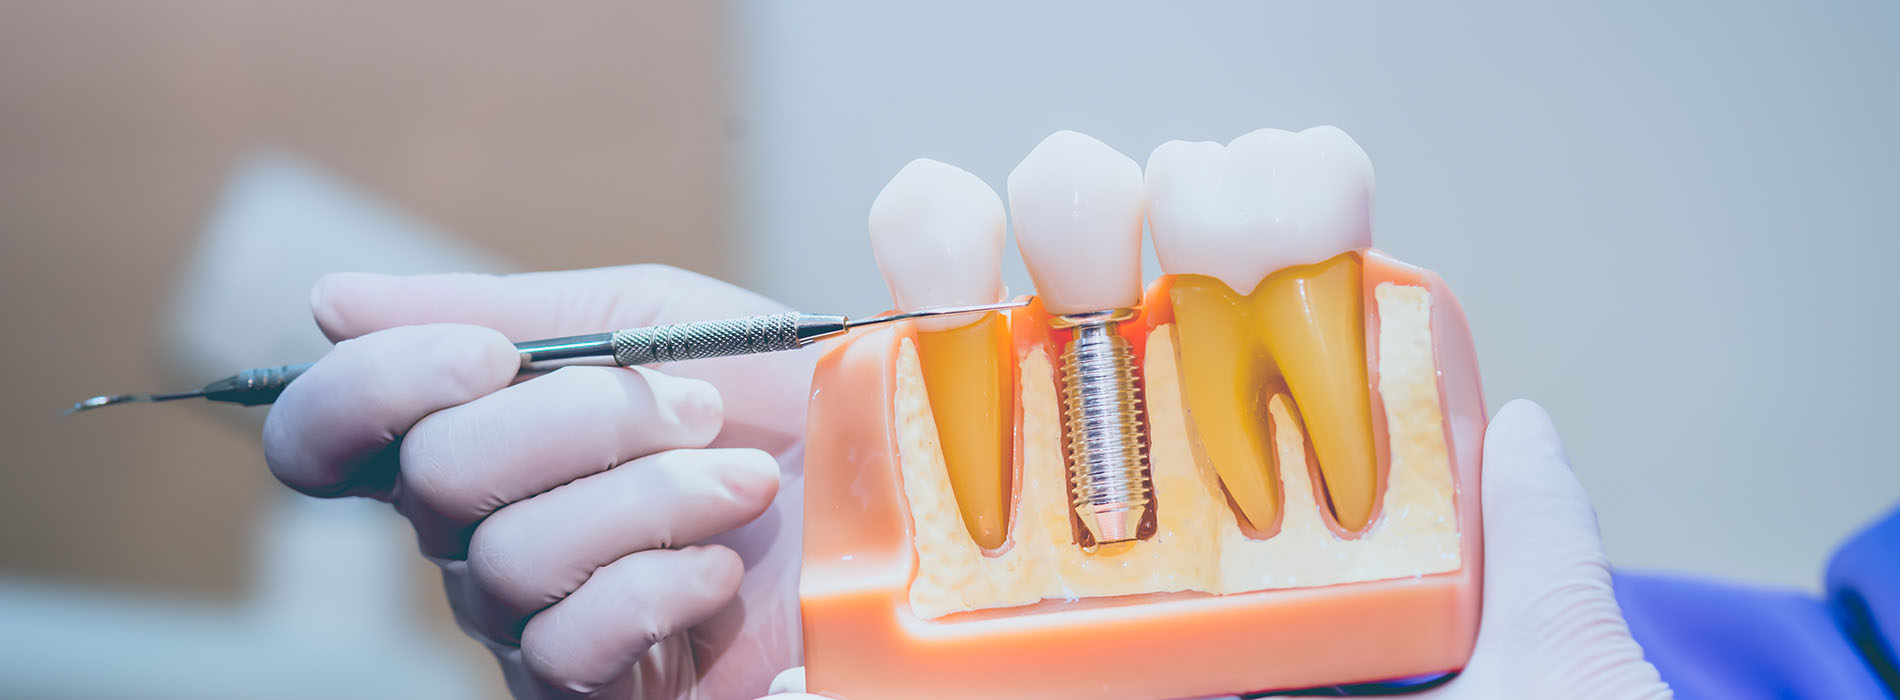 Glowing Smile Dental Studio | Implant Restorations, Preventative Program and Dental Bridges